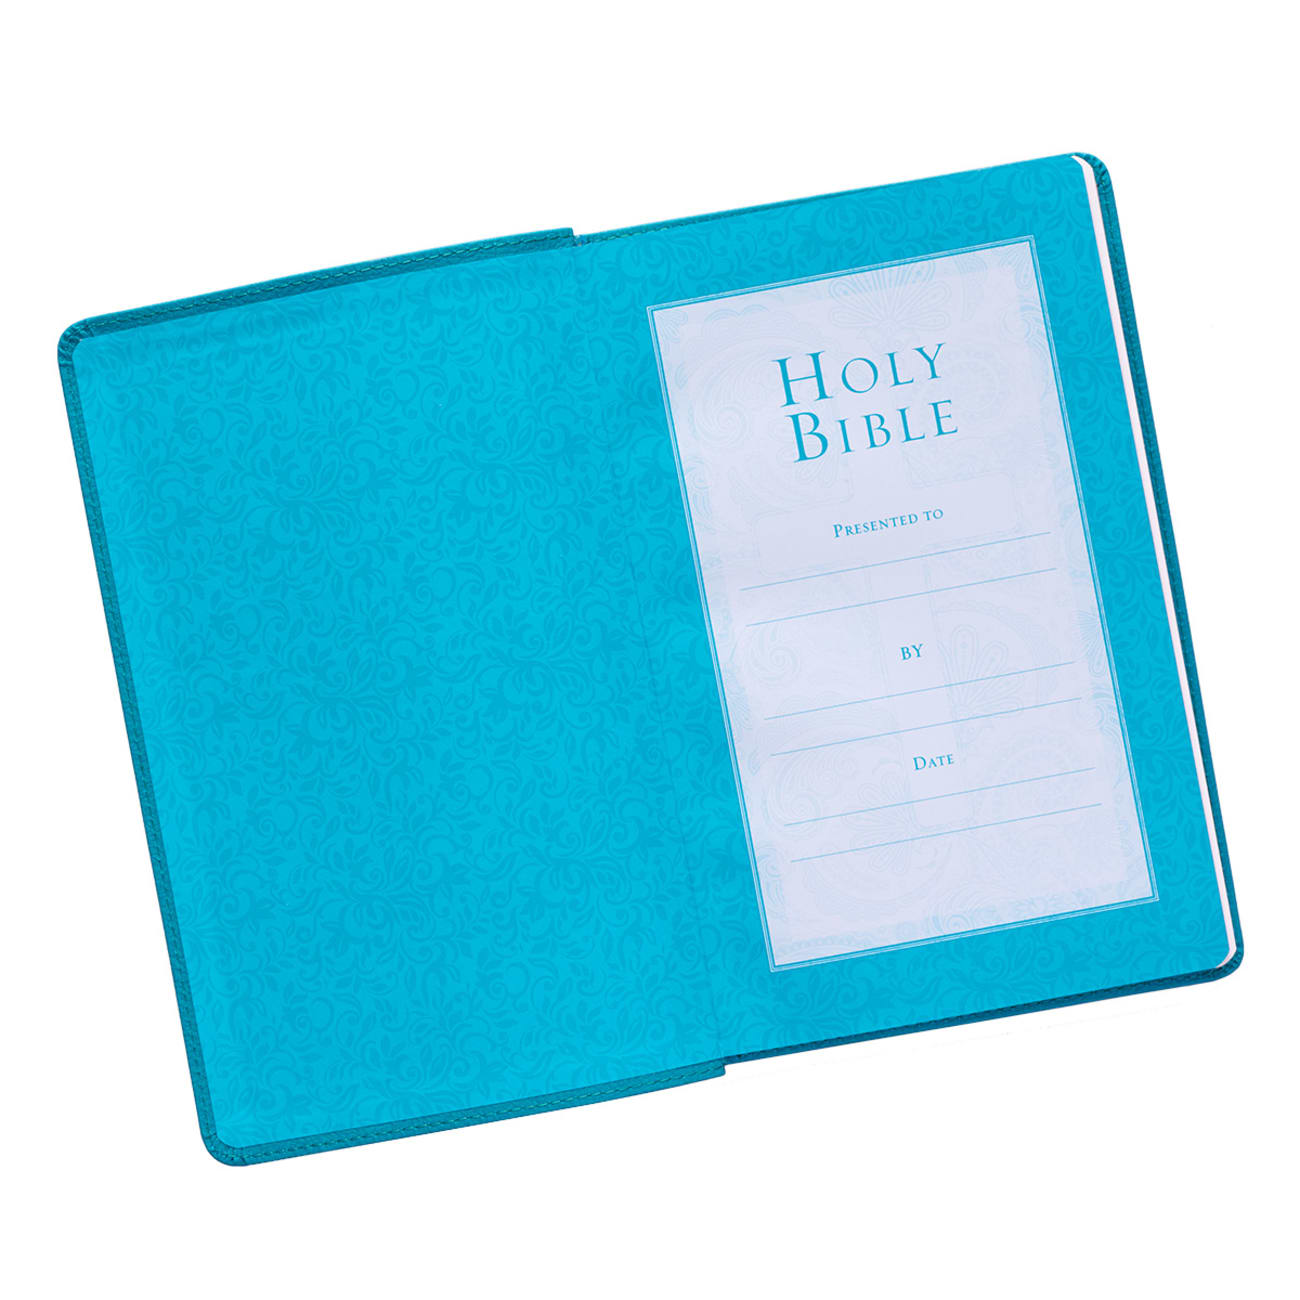 KJV Gift & Award Bible Turquoise (Black Letter Edition) Imitation Leather